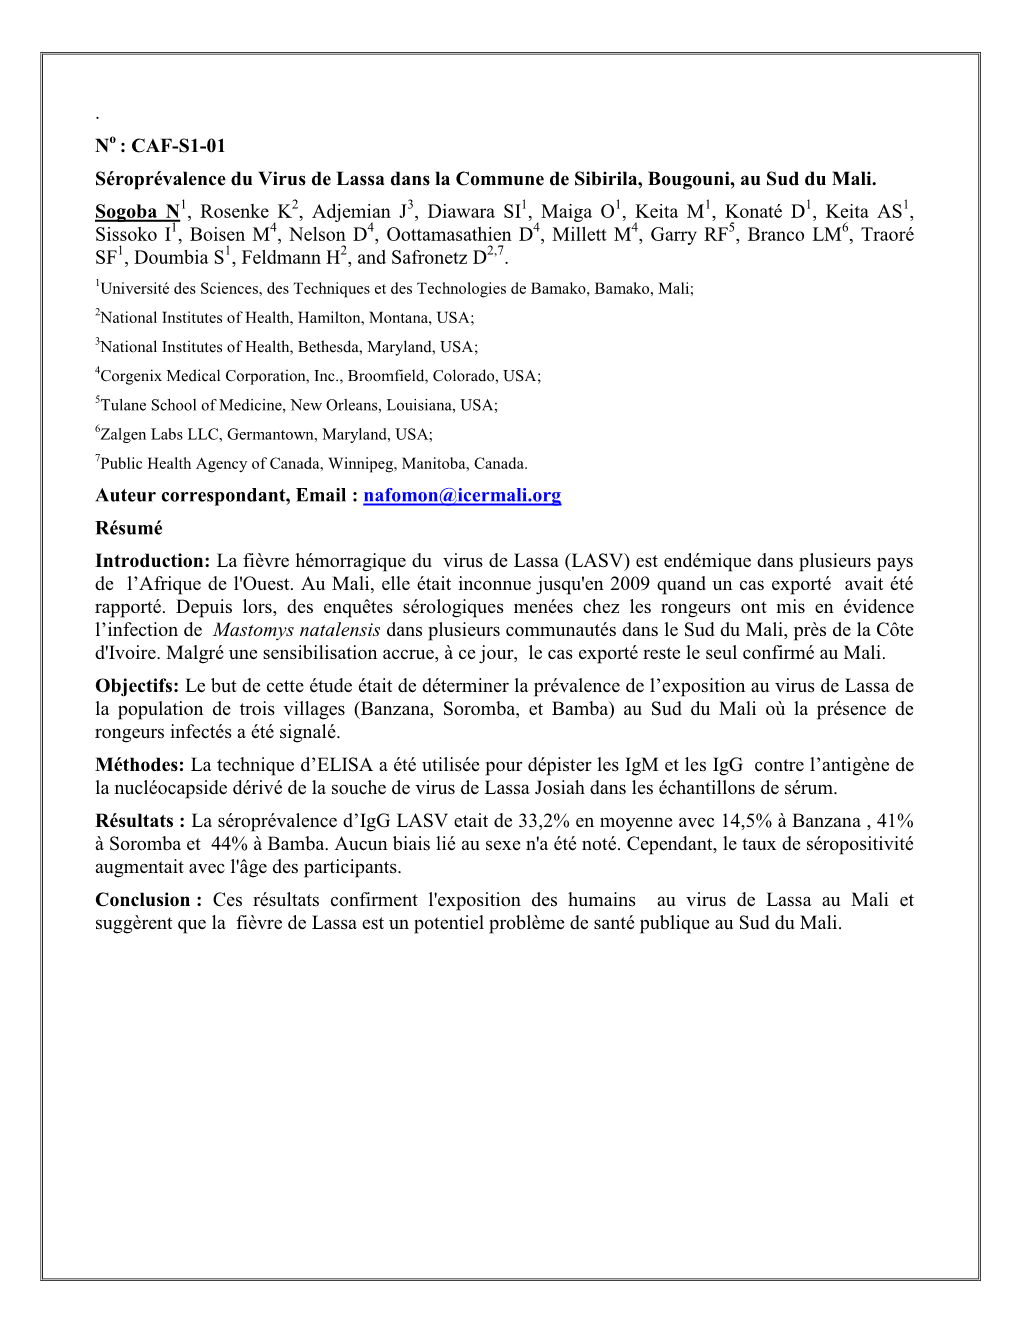 CAF-S1-01 Séroprévalence Du Virus De Lassa Dans La Commune De Sibirila, Bougouni, Au Sud Du Mali